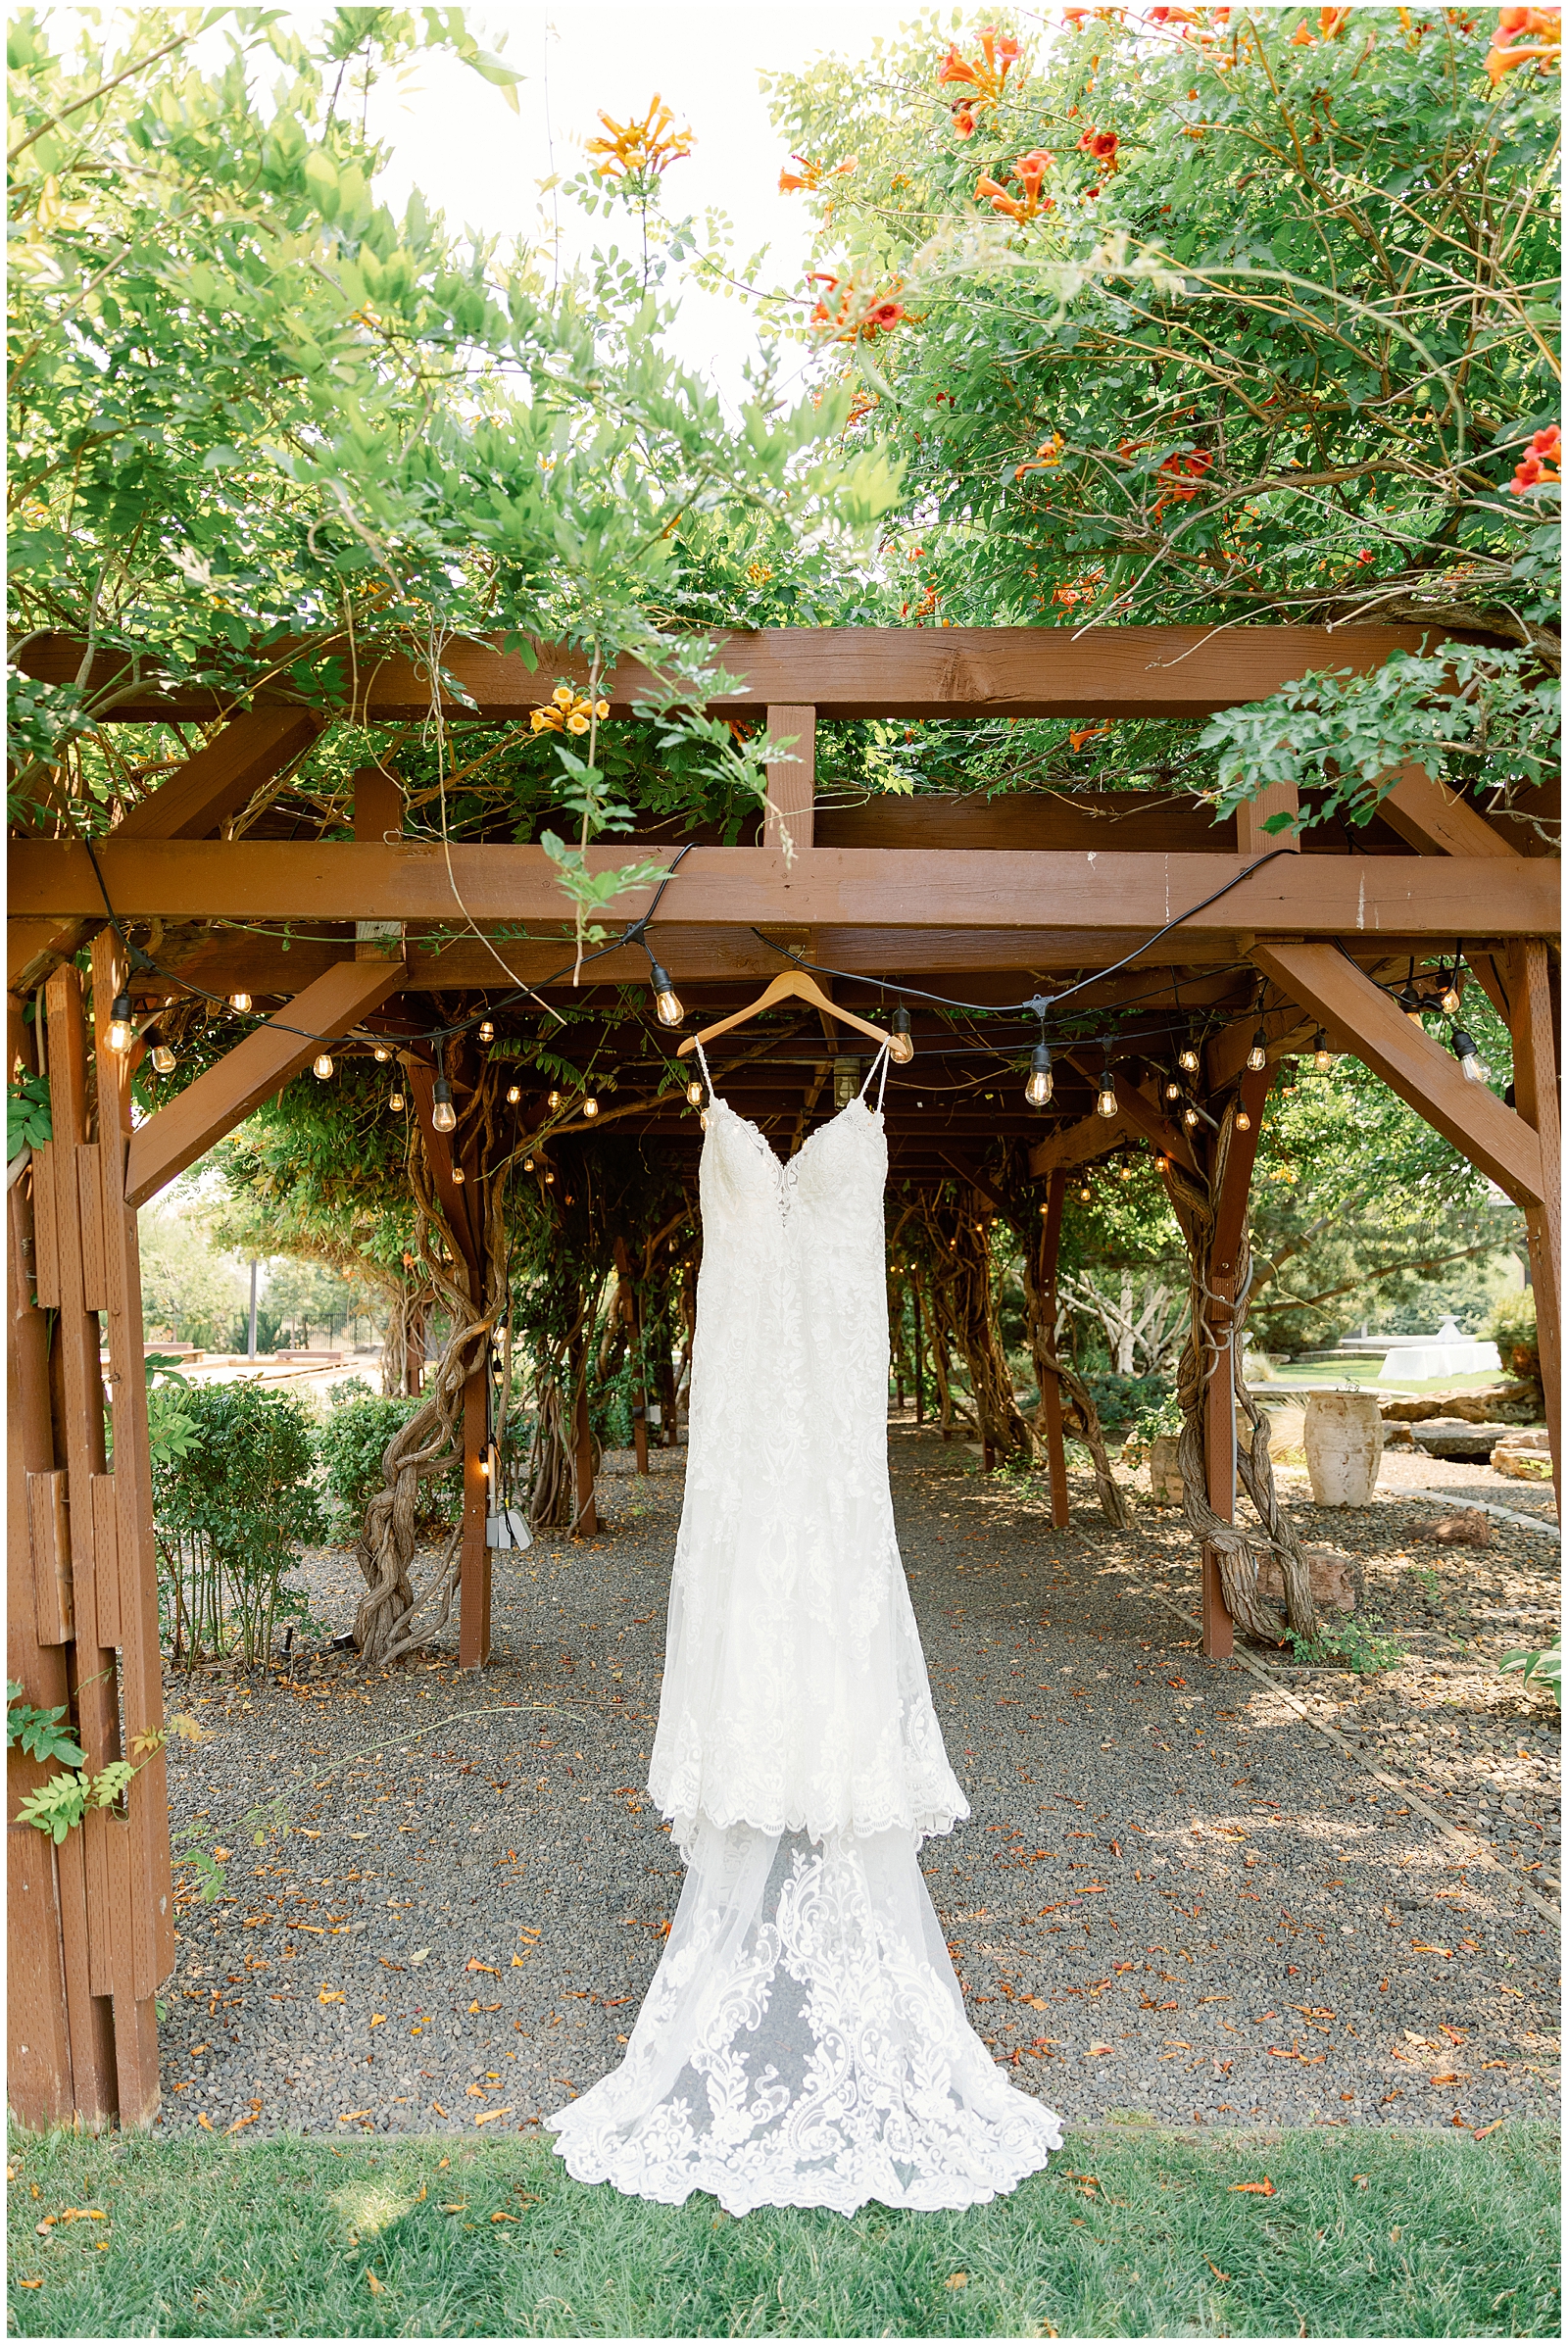 Idaho Flats 16 Wedding Dress Hanging on the Trellis